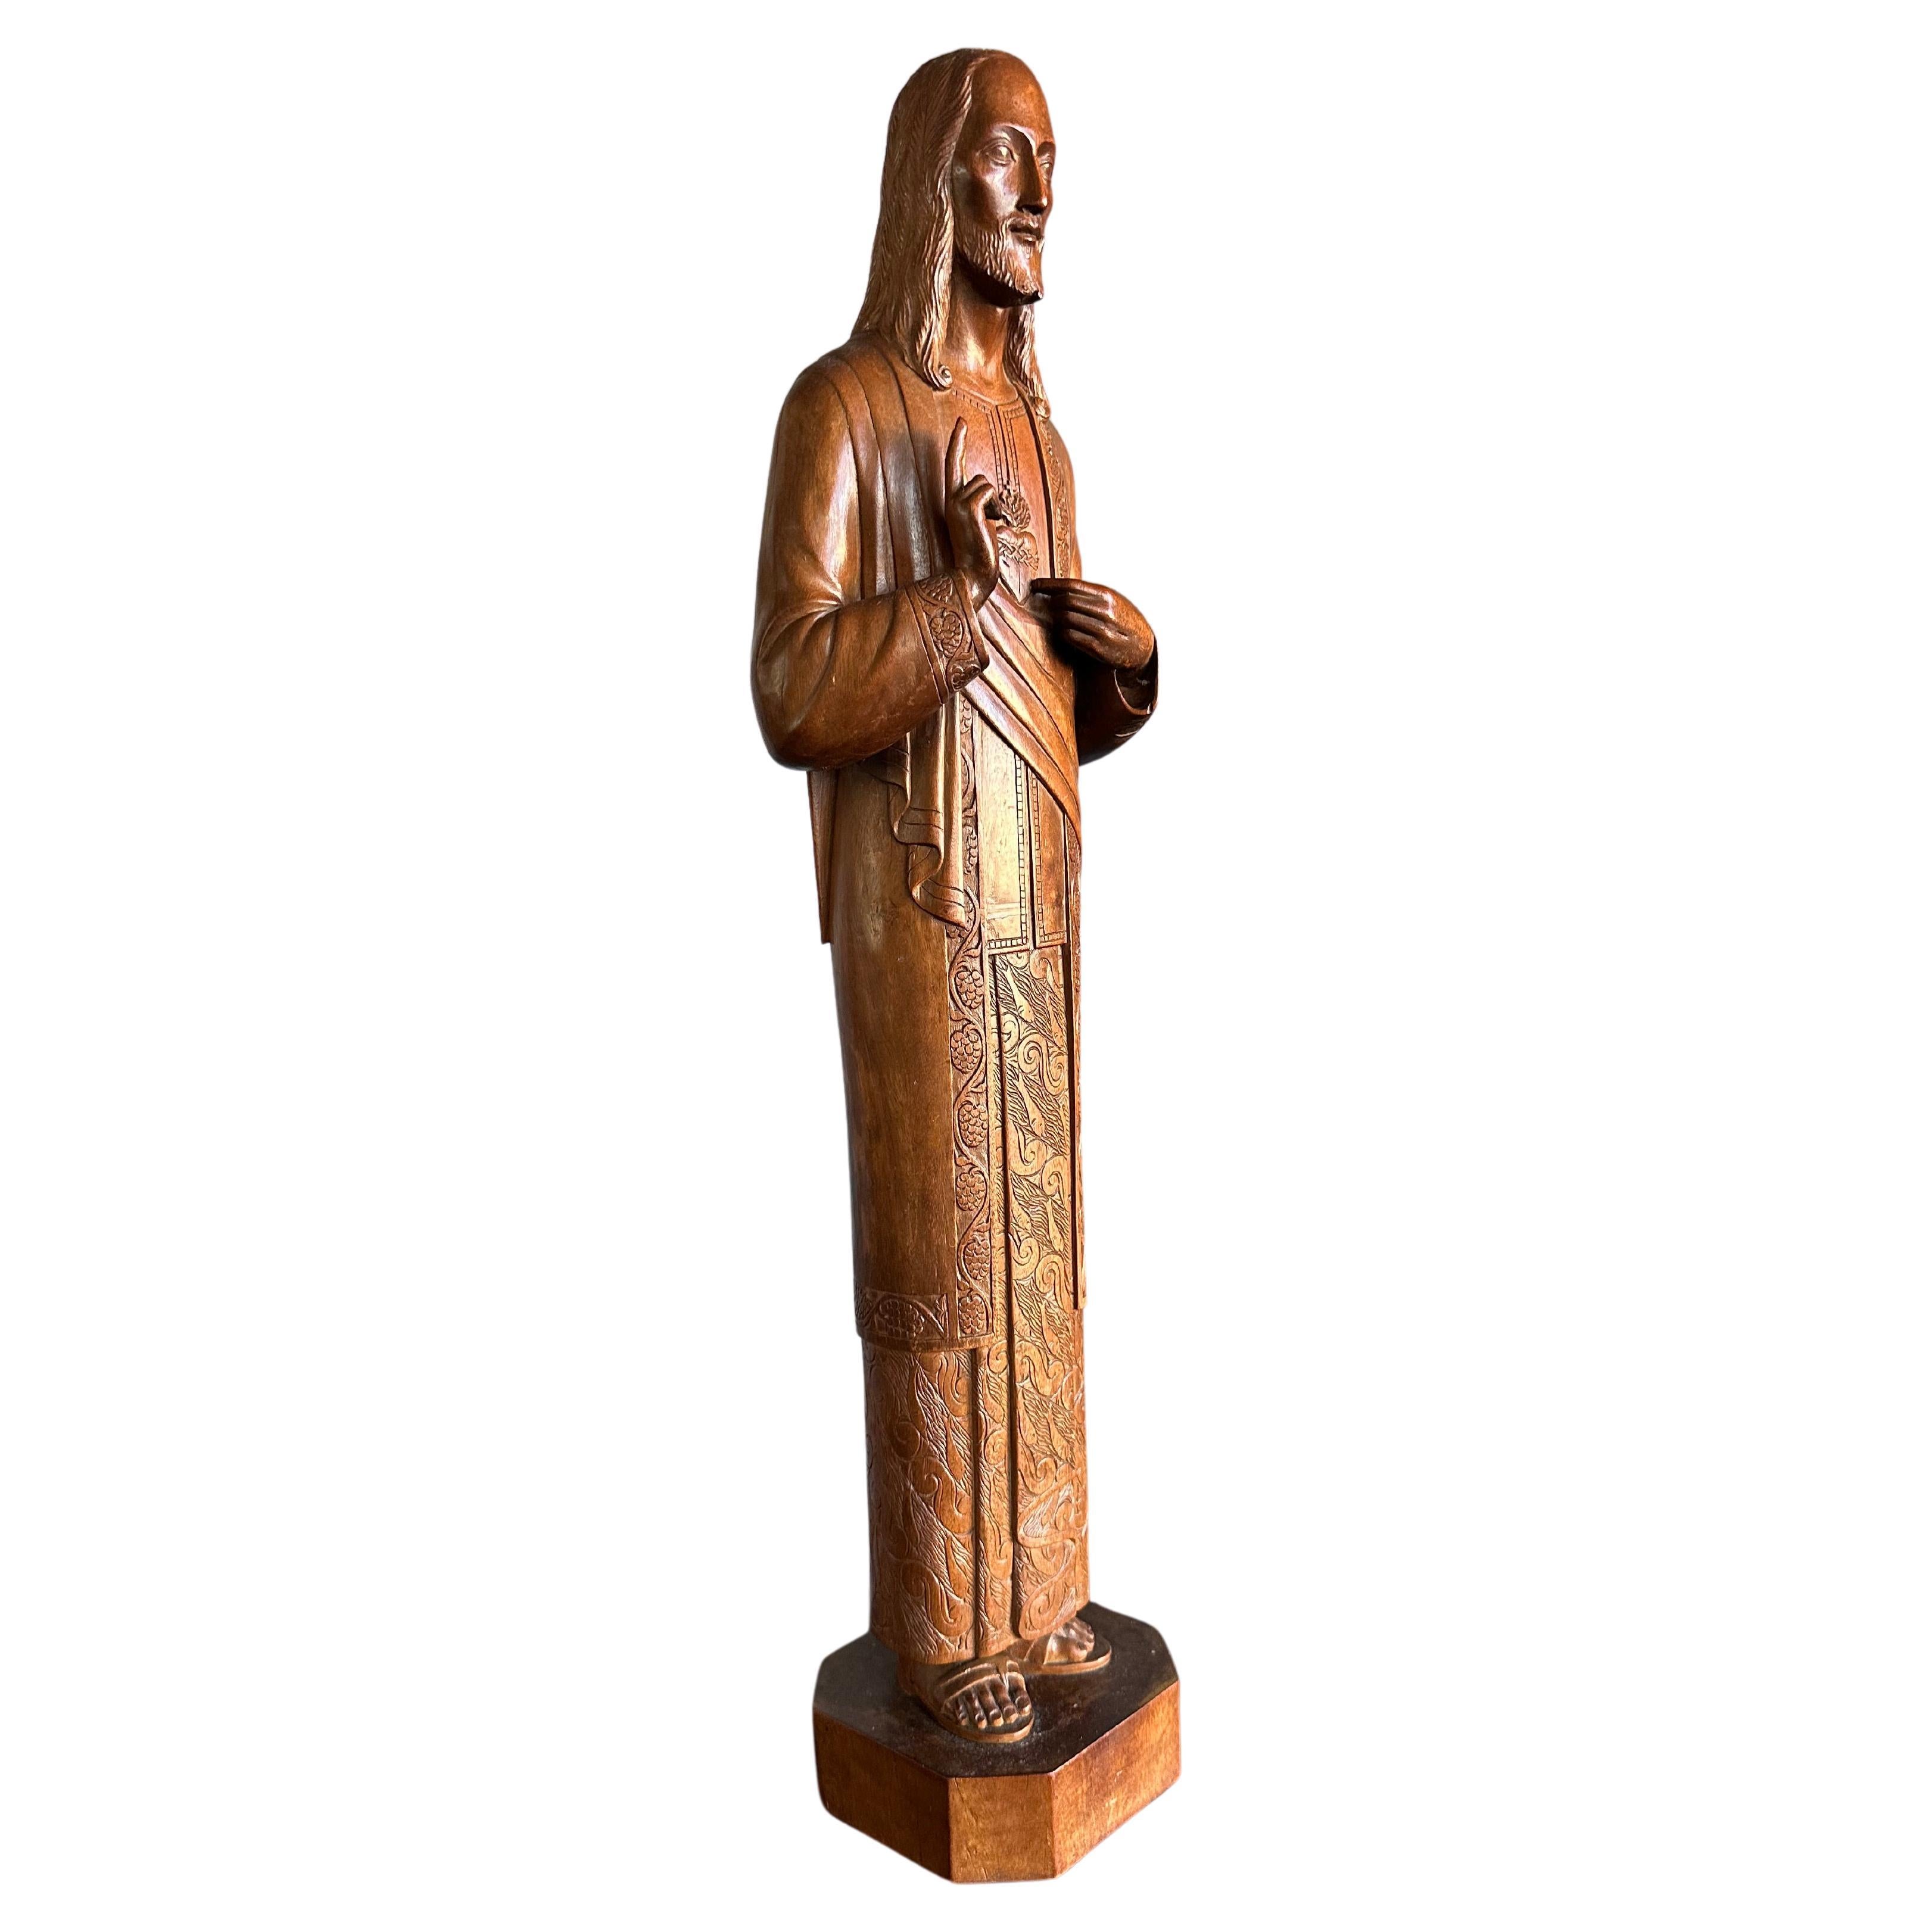 Antique & Unique, Hand Carved Wooden Sacred Heart of Christ Sculpture / Statue